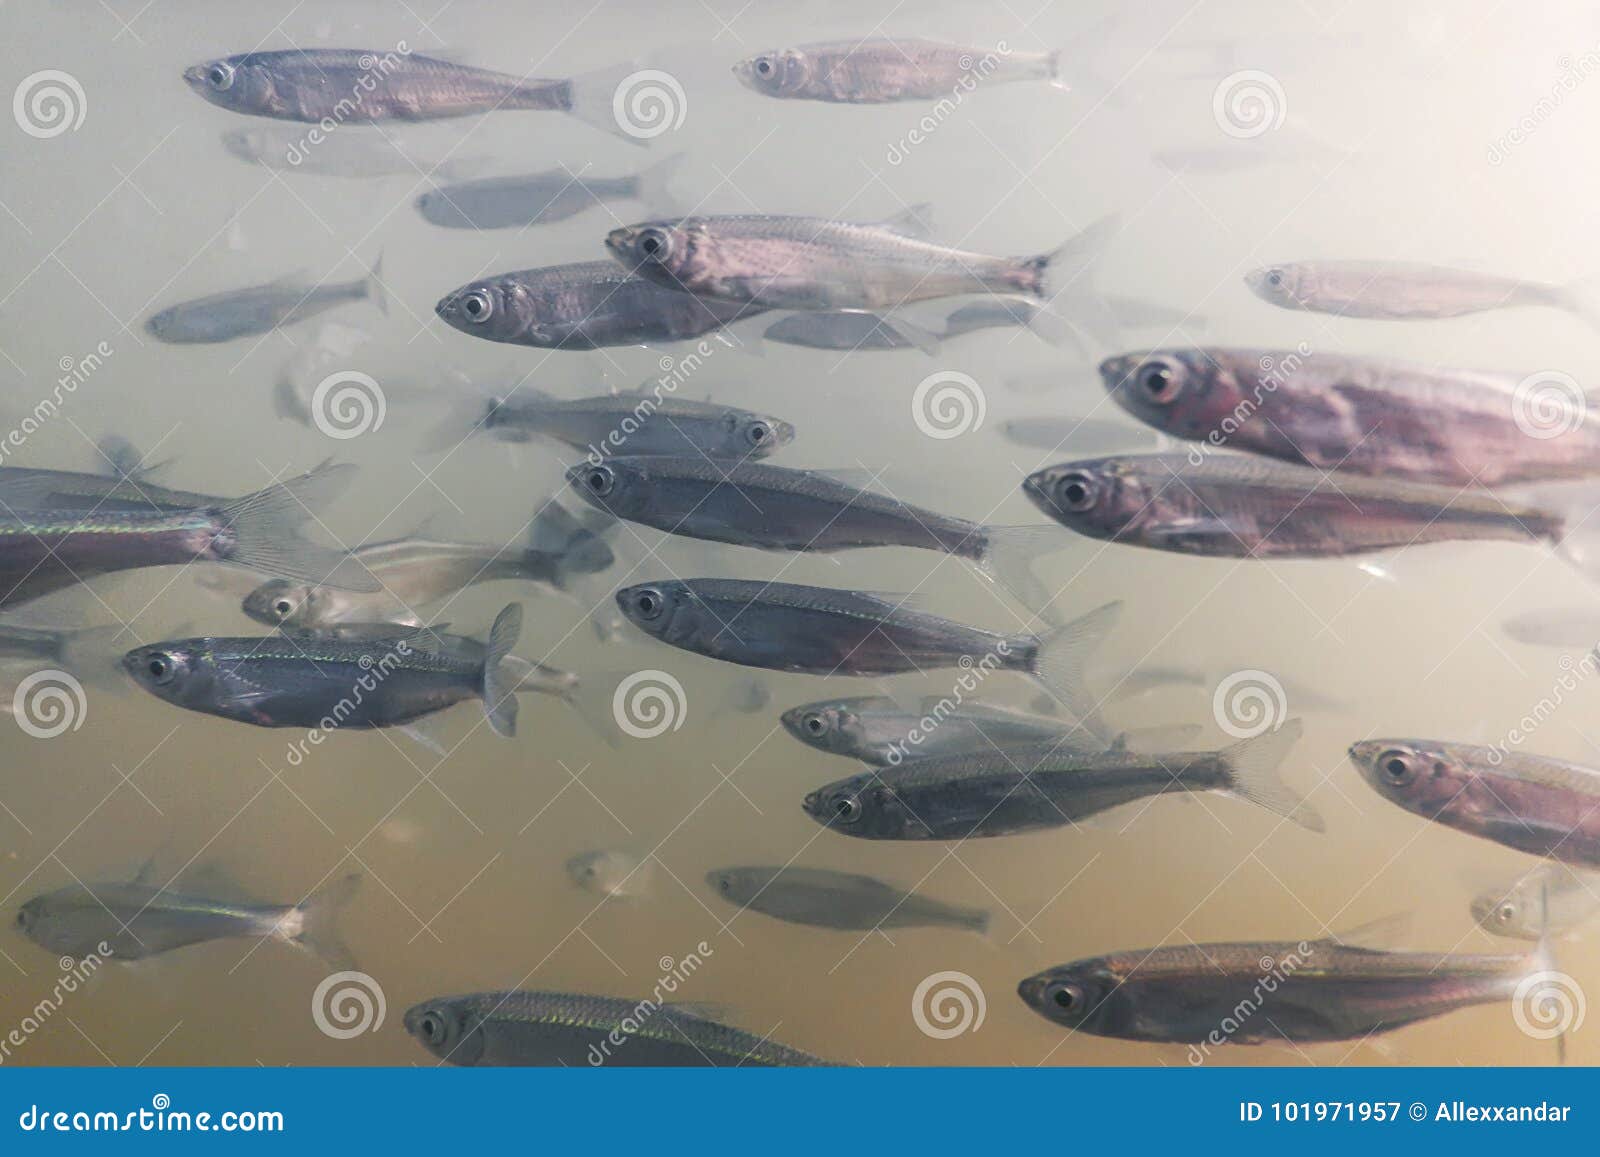 Bait Fish Freshwater Underwater. Common Bleak Close Up Stock Image - Image  of blue, nature: 101971957